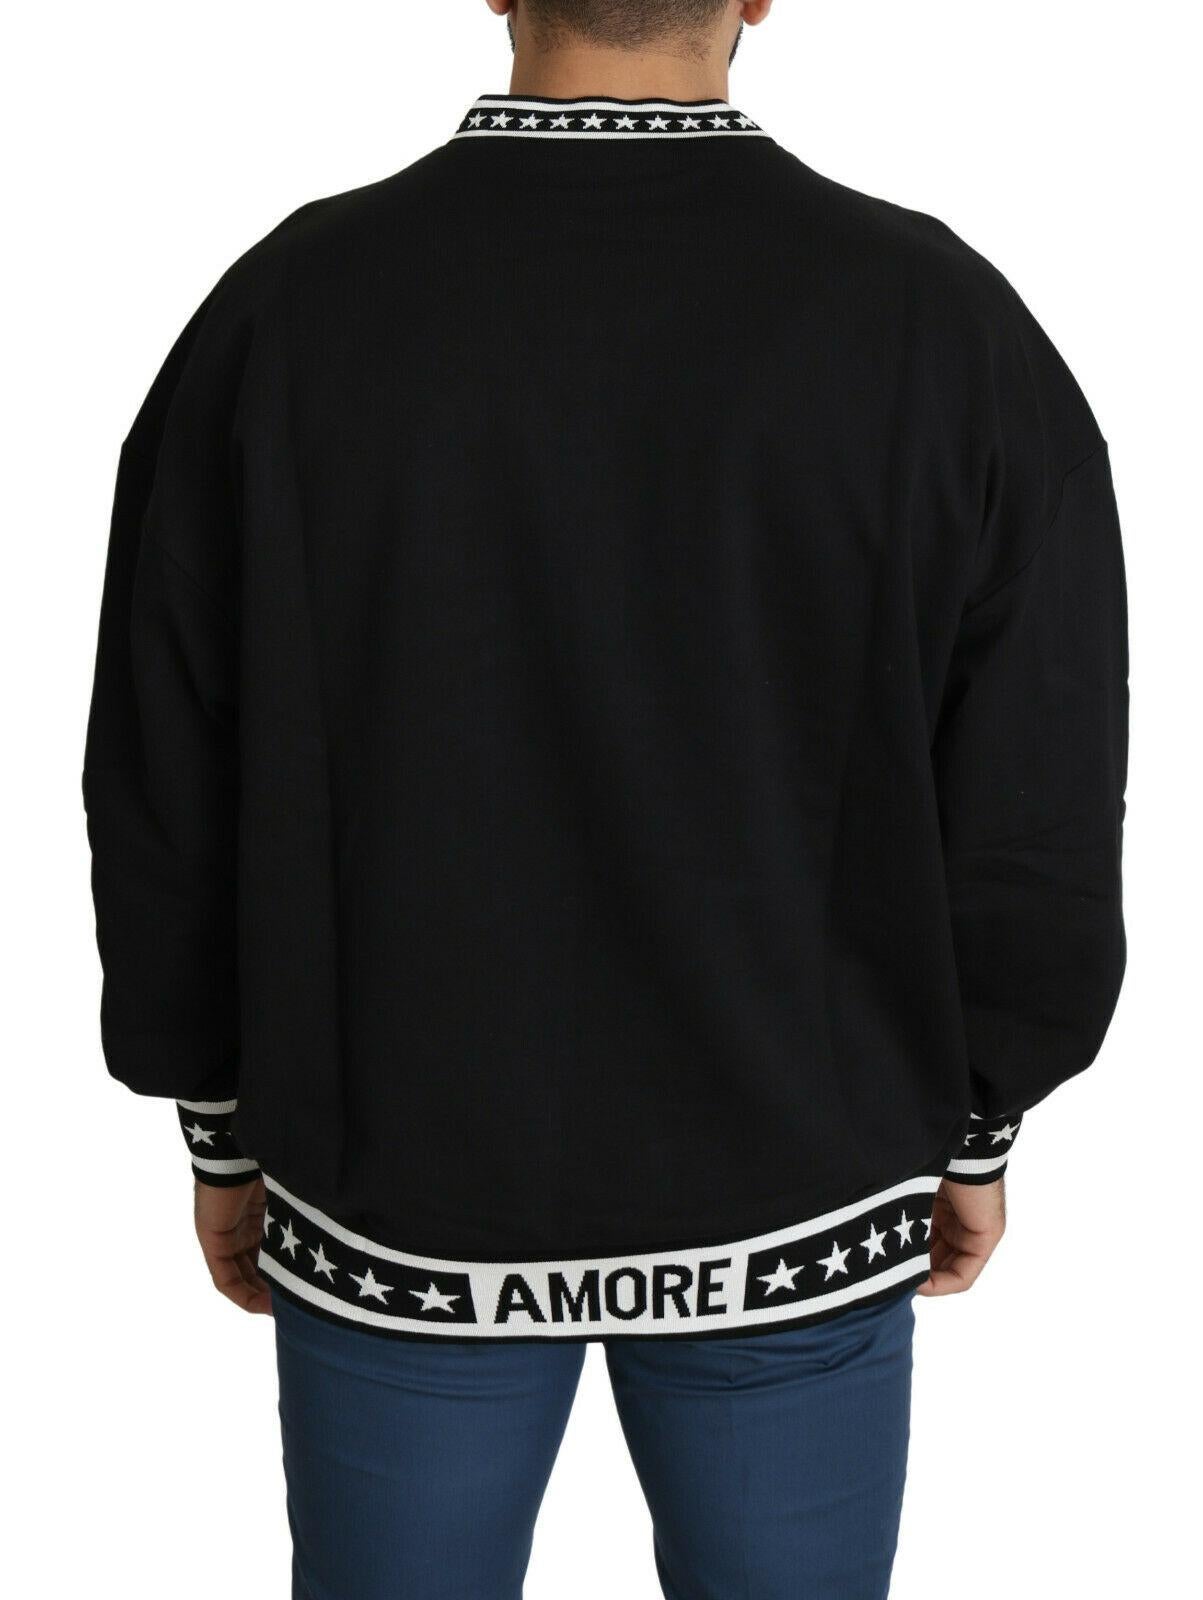 Dolce & Gabbana Black Multicolor Cotton Pullover Sweater Sweatshirt DG DNA Amore 1